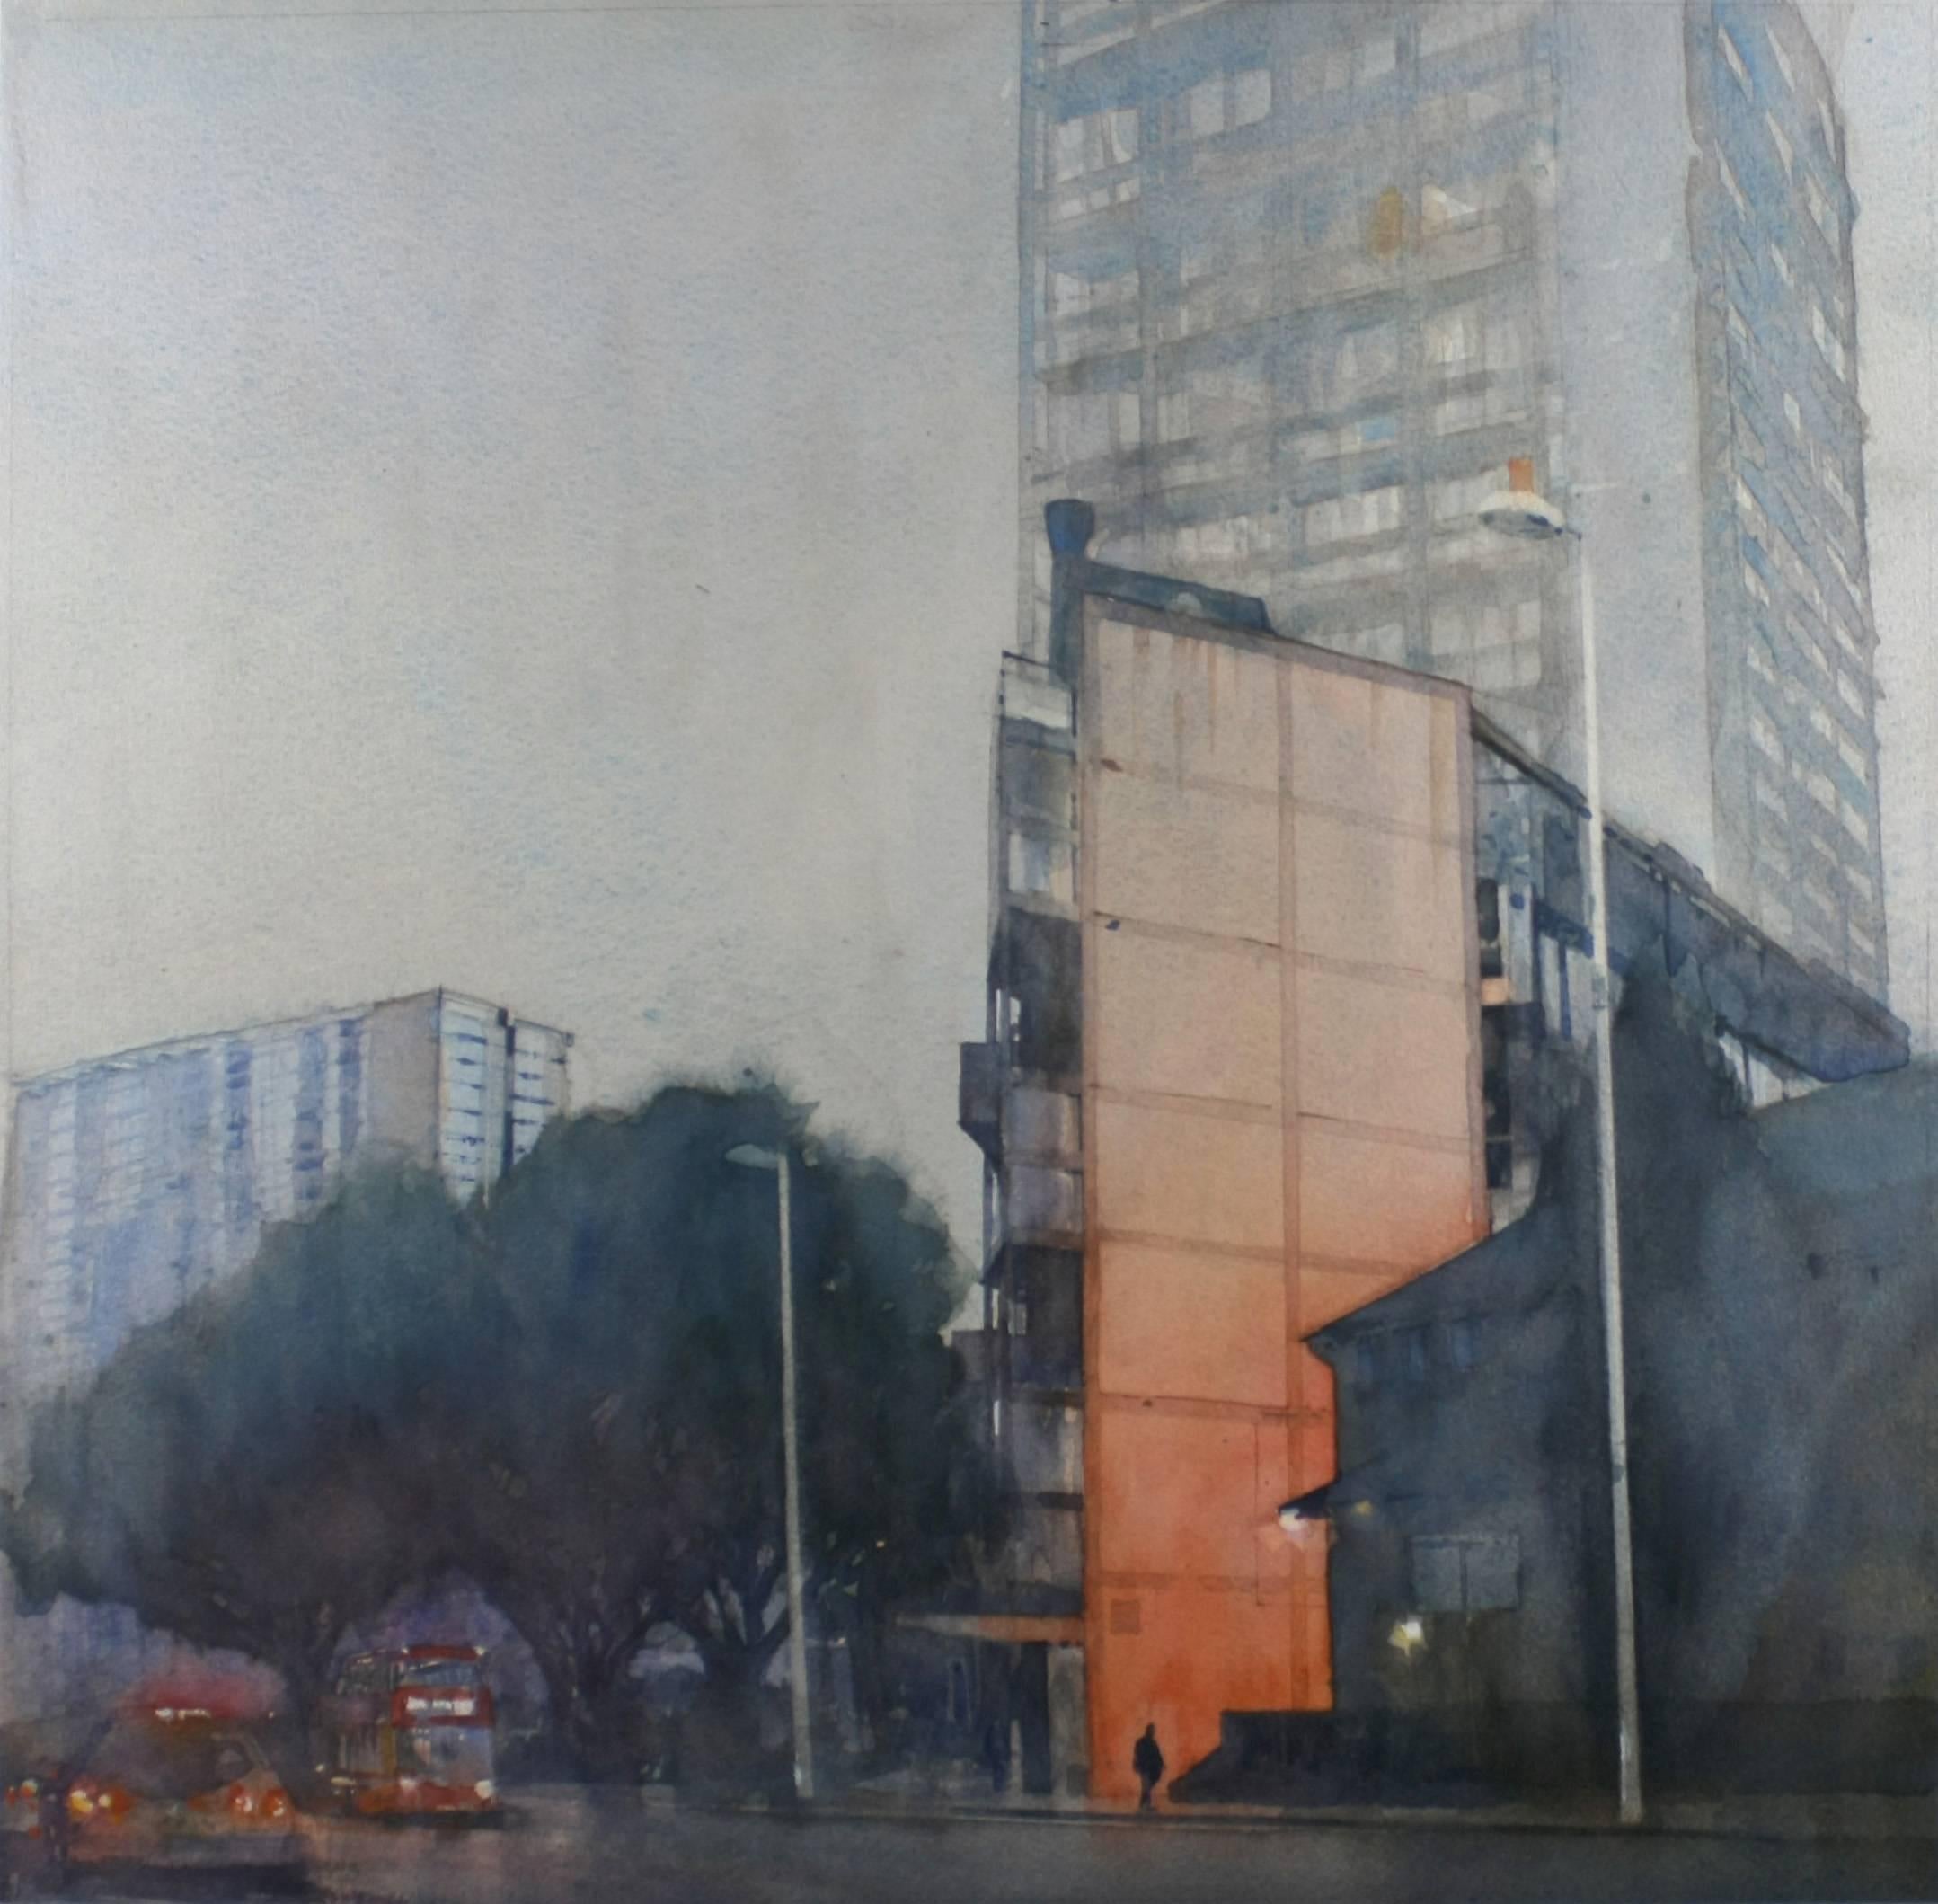 David Walker Landscape Art - Morning Light - illustrative cityscape tower architecture watercolour on paper